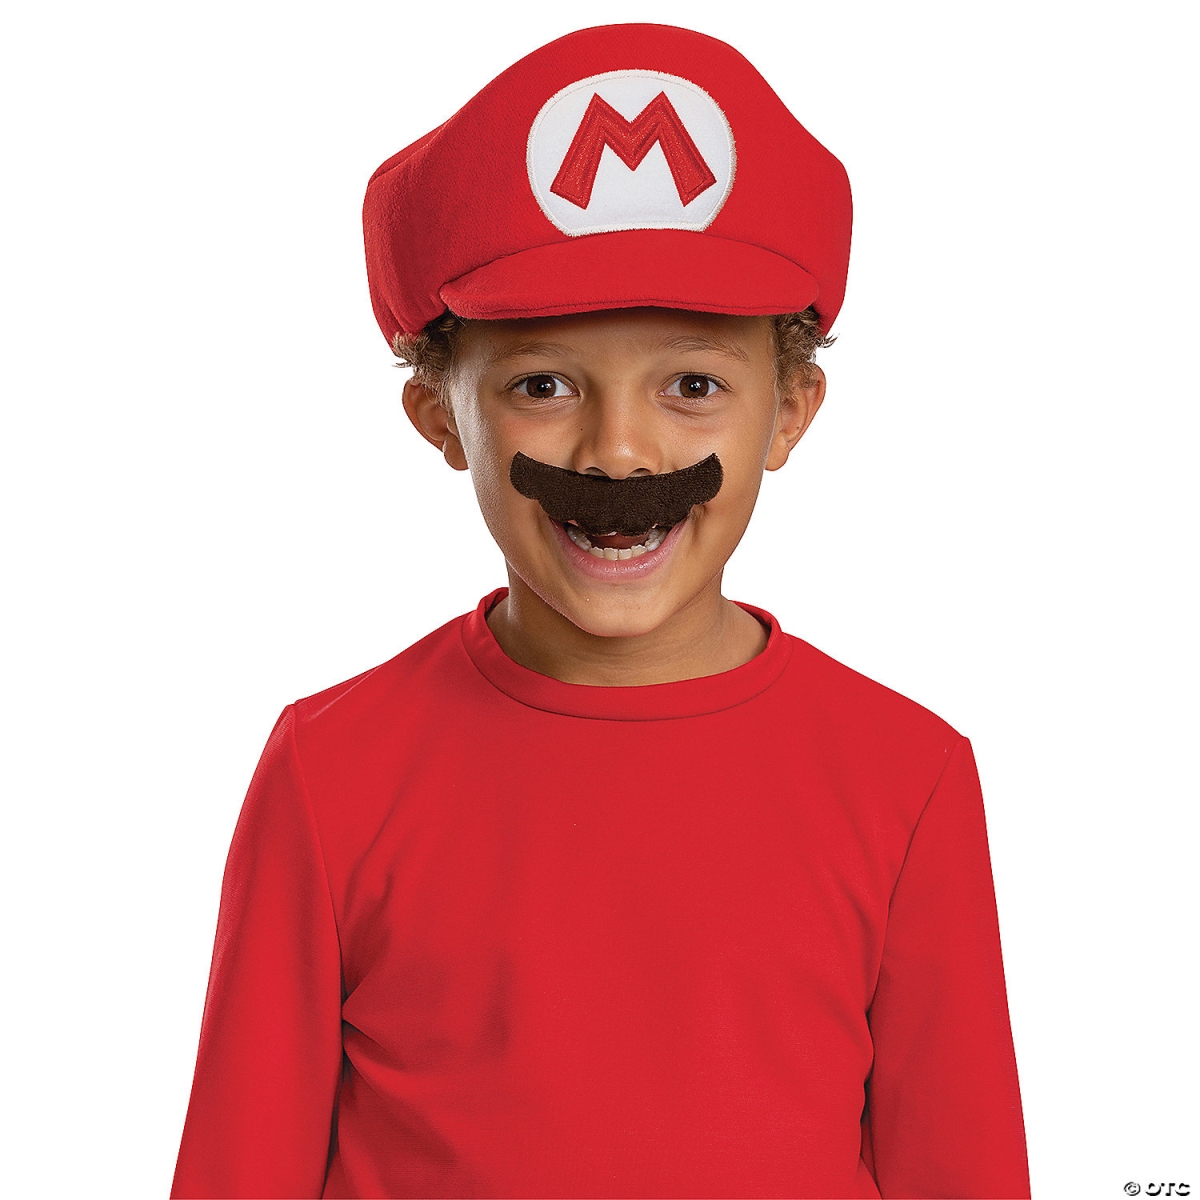 Picture of Disguise DG146339 Kids Elevated Mario Bros. Mario Mustache Costume Accessory